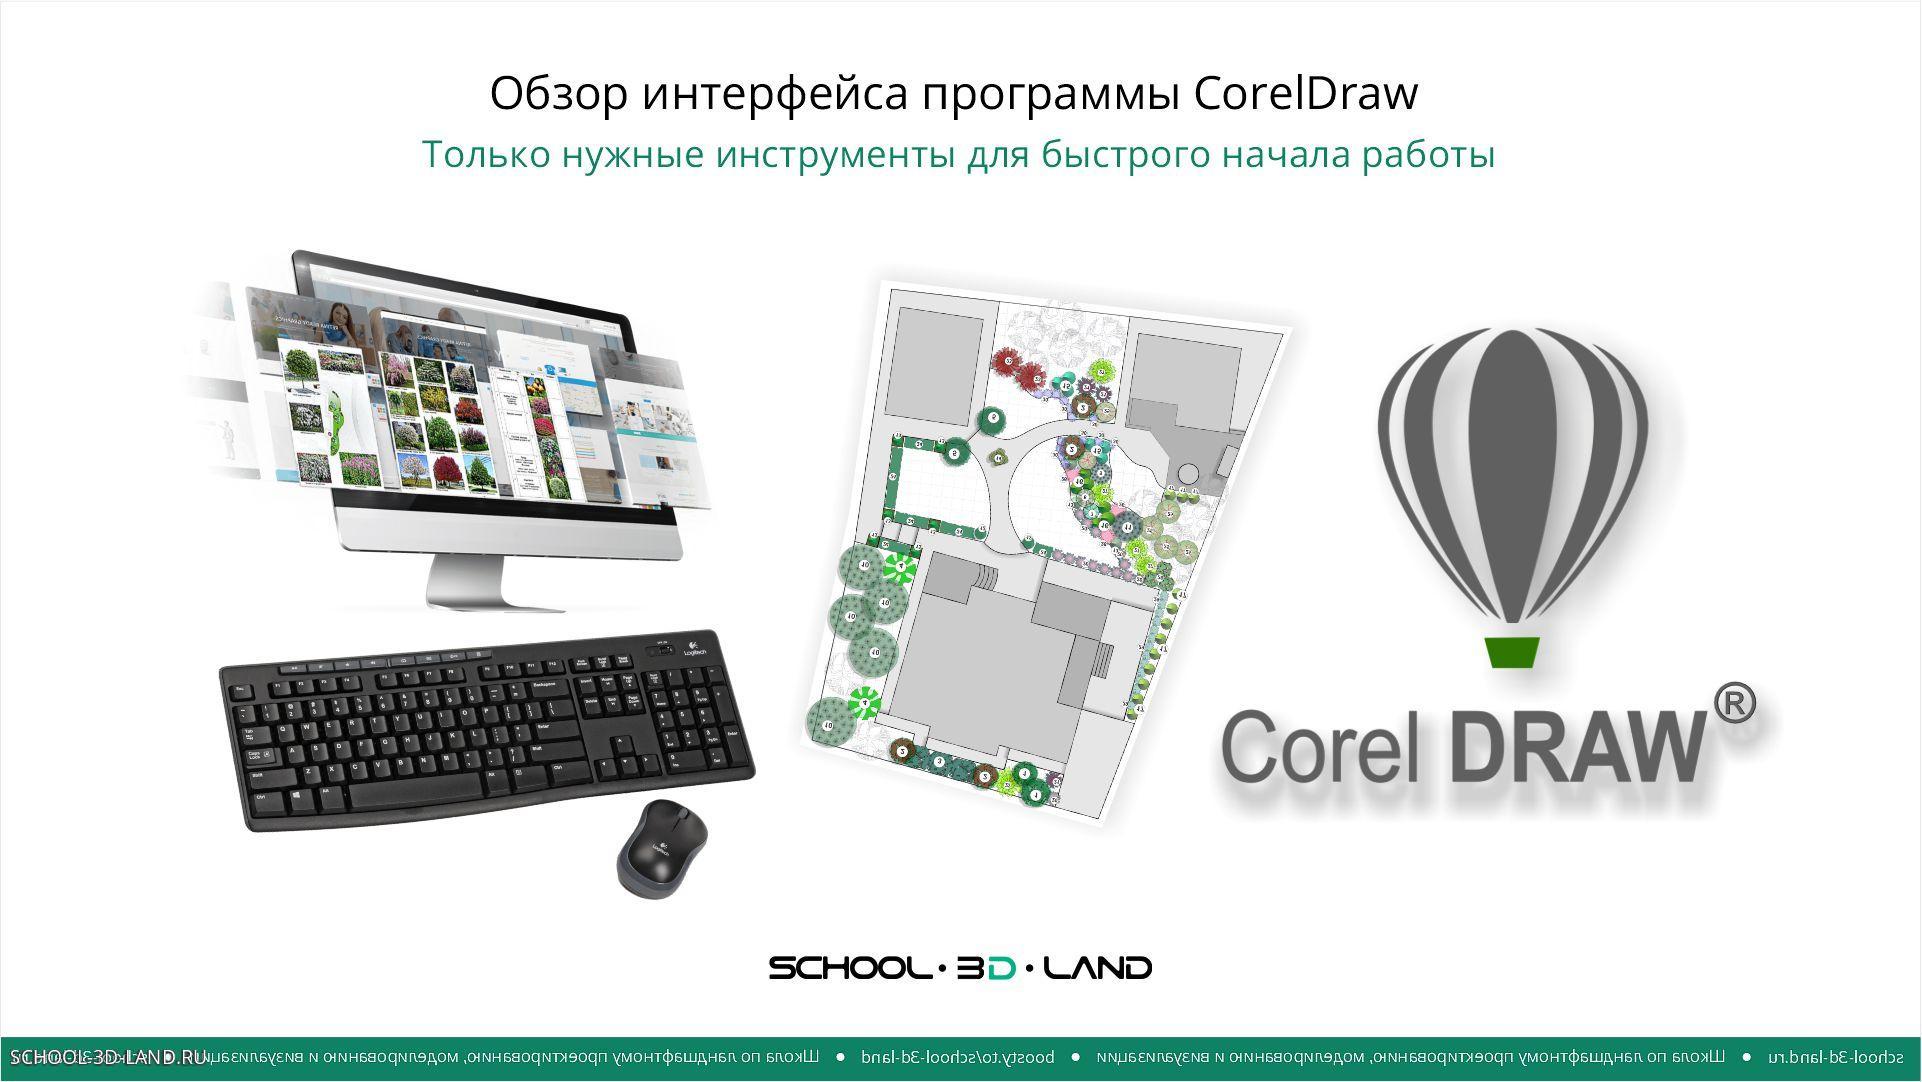 CorelDRAW interface overview